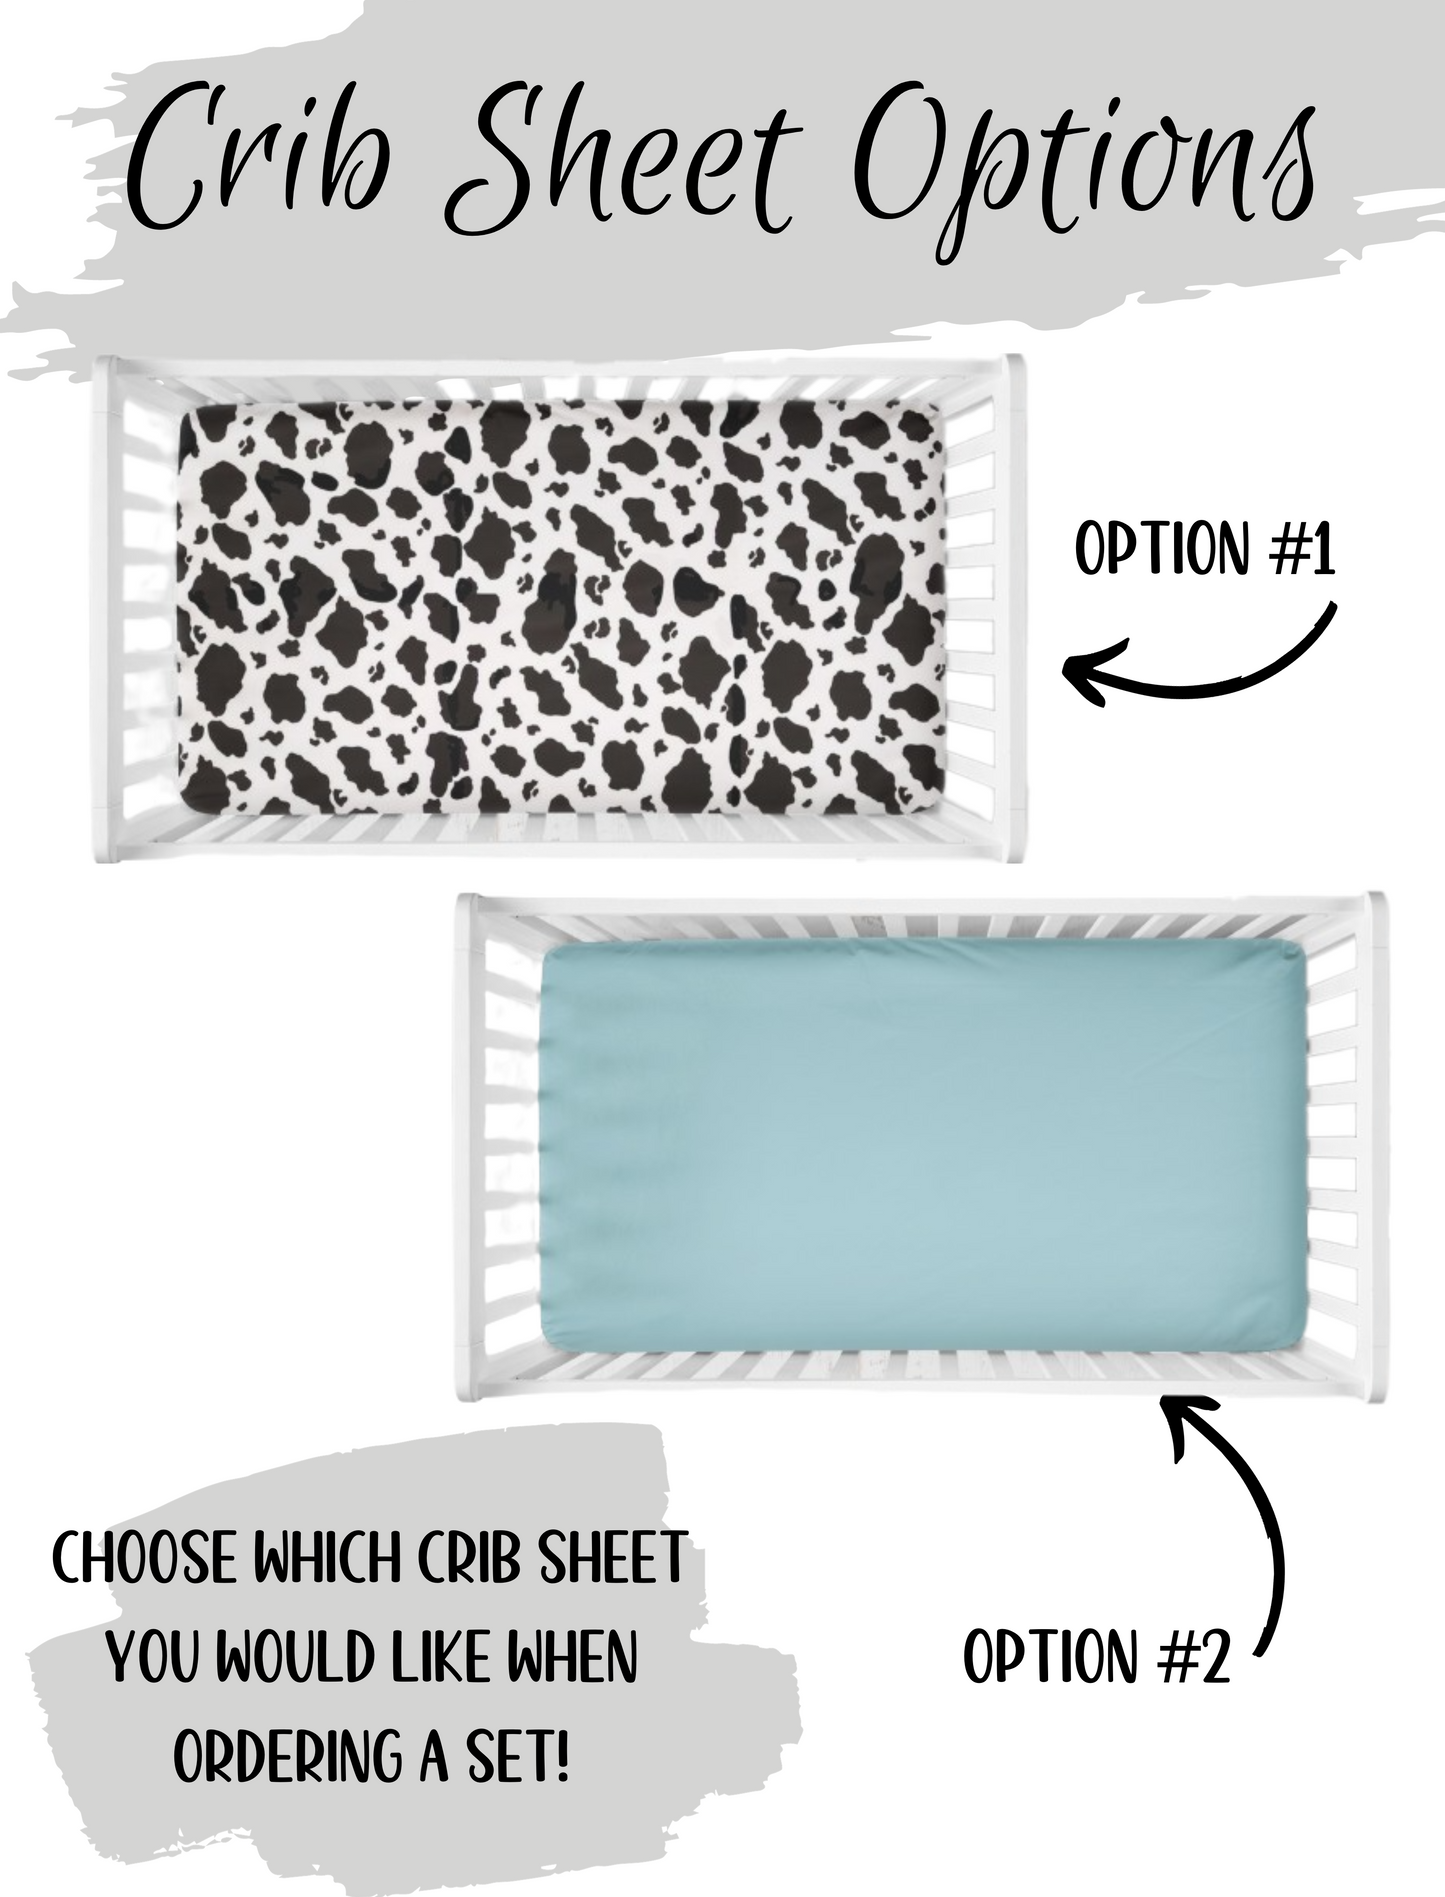 crib sheet options - switch the aqua sheet out for a cow print sheet